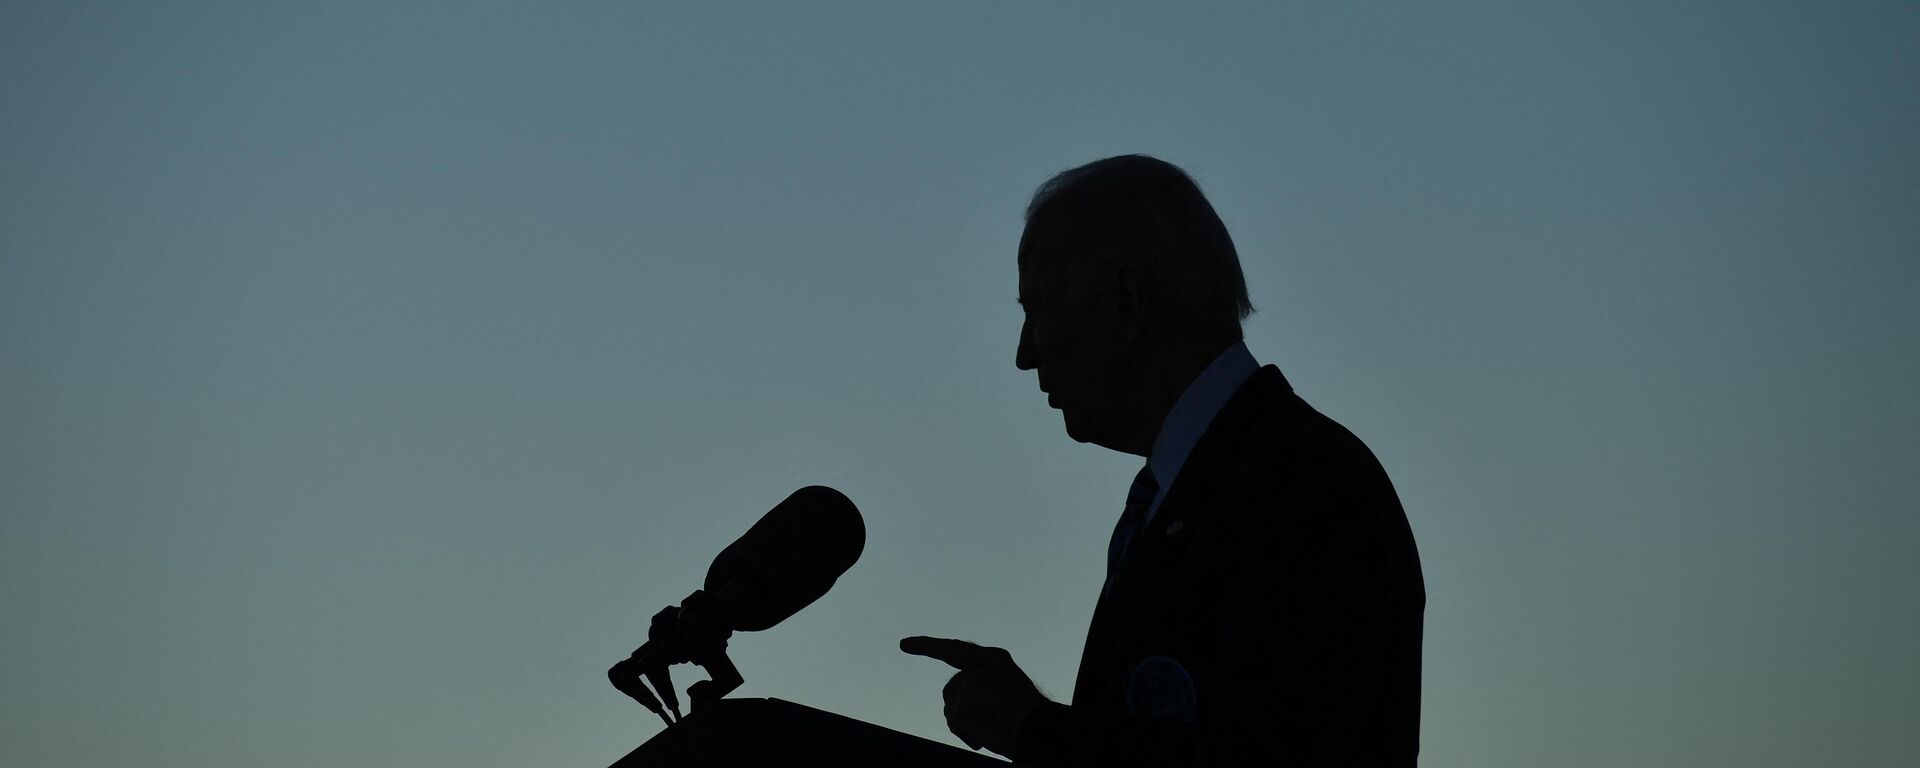 US President Joe Biden speaks during a visit at the Port of Baltimore in Baltimore, Maryland on November 10, 2021 - Sputnik International, 1920, 19.11.2021